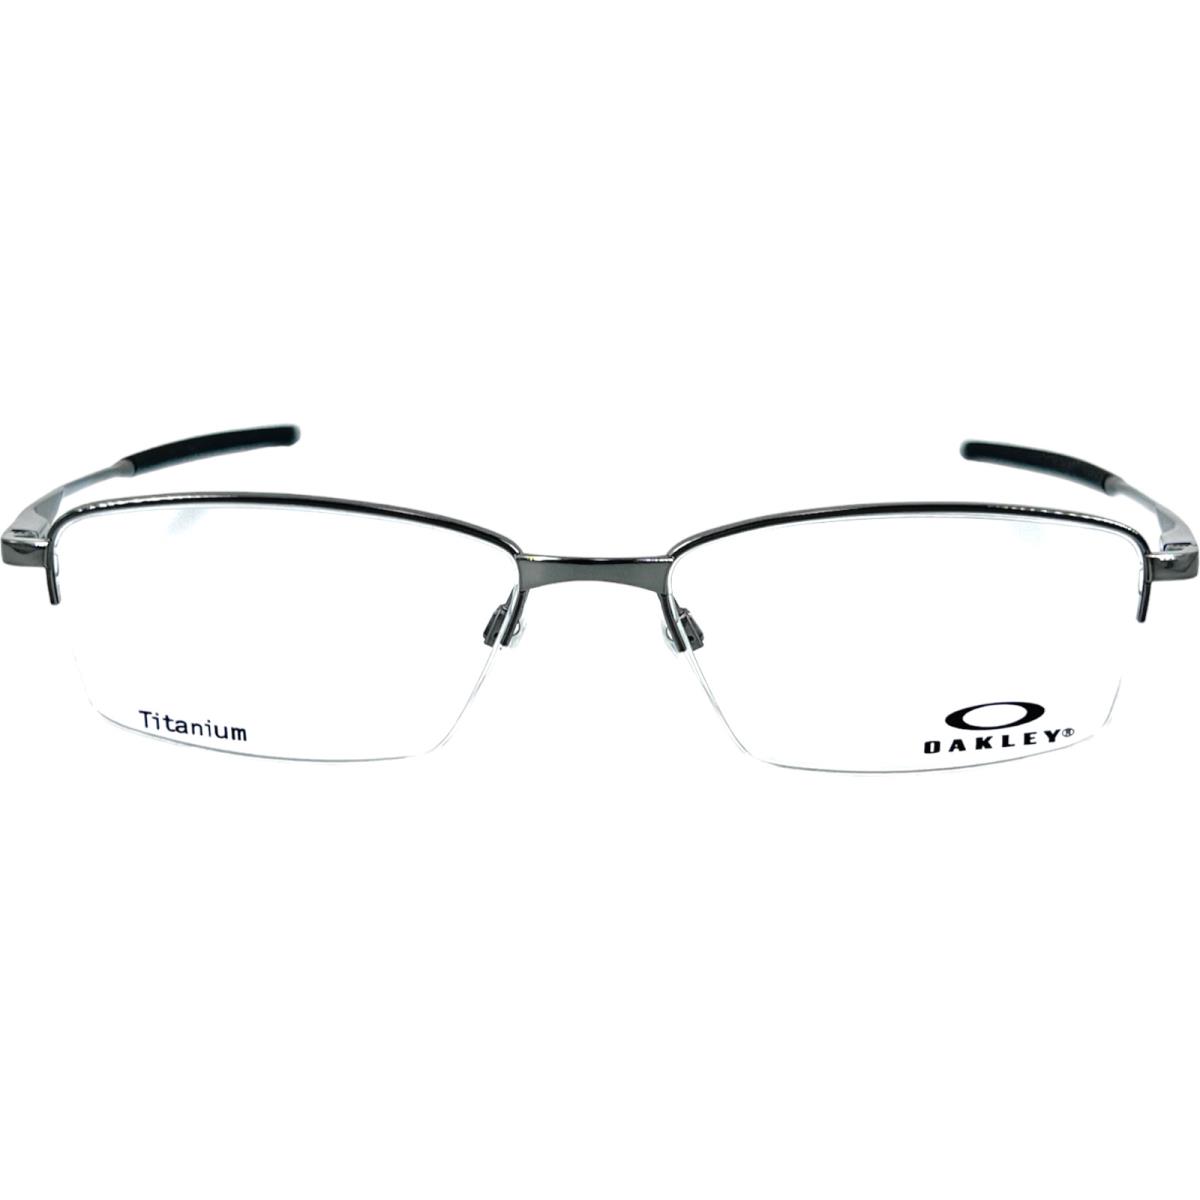 Oakley Limit Switch 0.5 Mens Semi Rimless Eyeglass Frame 0454 Black Chrome 54-17